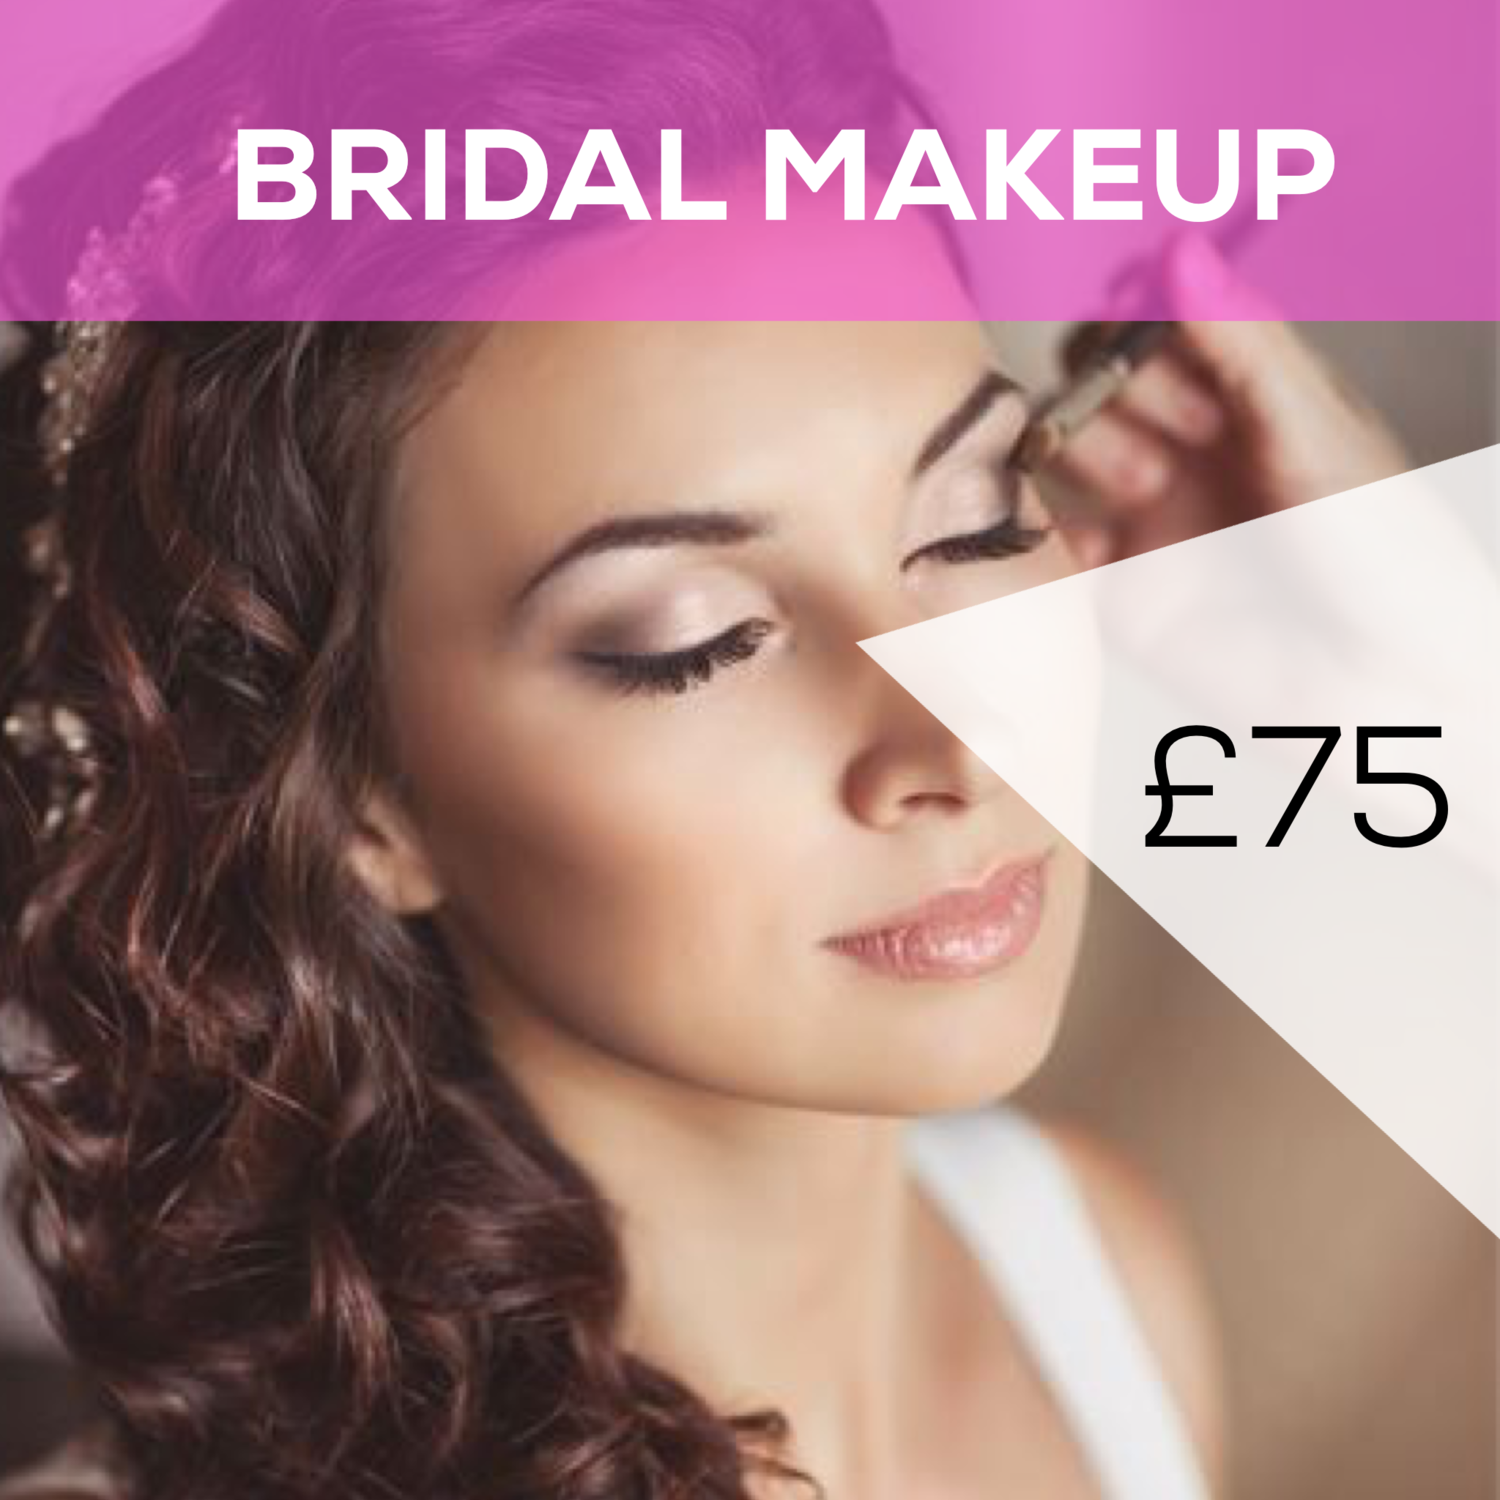 Bridal Makeup trial & consultation